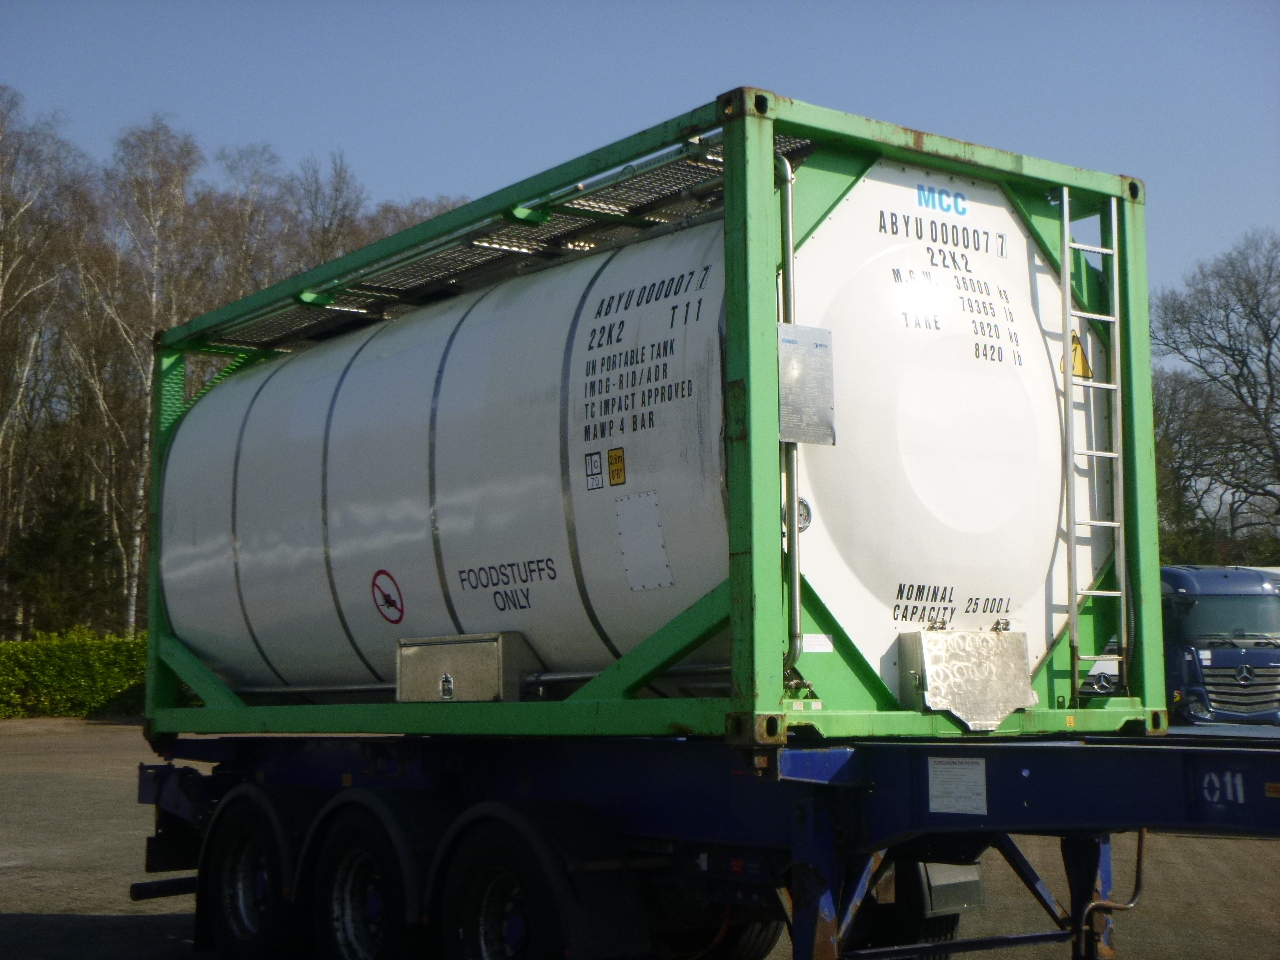 Tankcontainer, Sættevogn Danteco Food tank container inox 20 ft / 25 m3 / 1 comp: billede 2